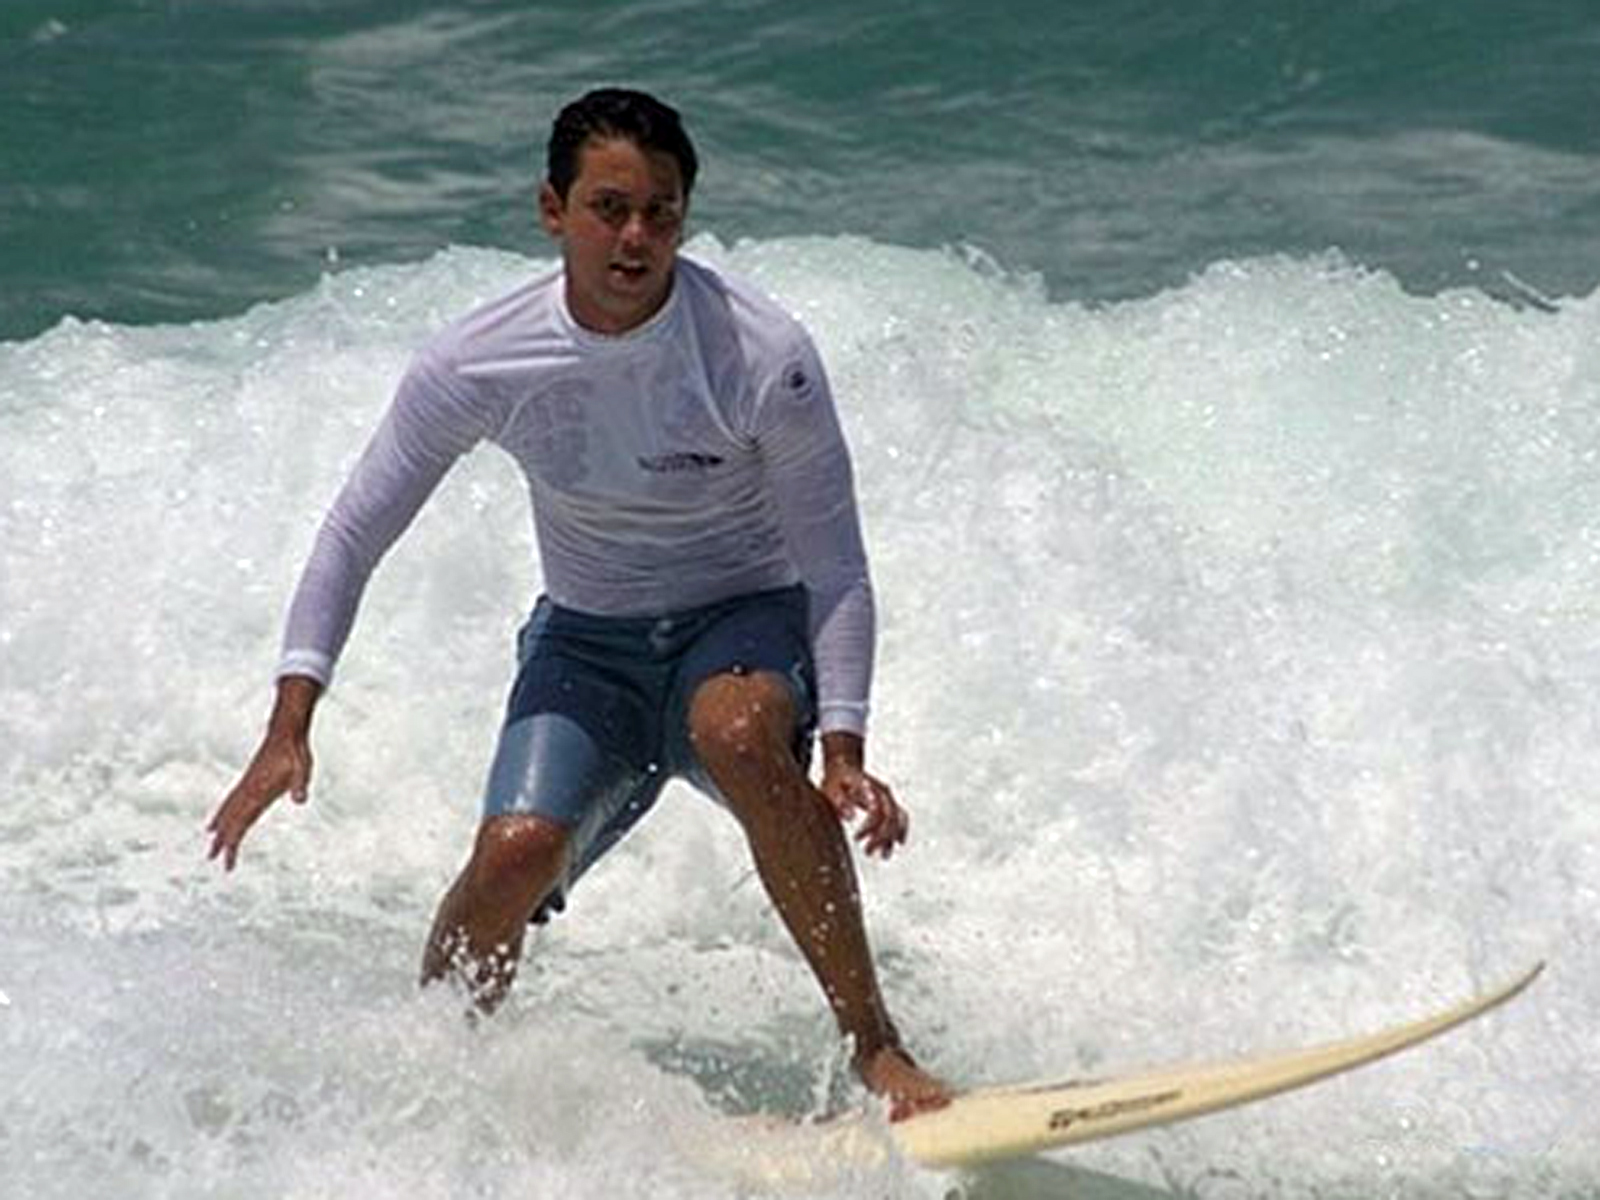 Vaticano reconhece virtudes e surfista carioca pode virar santo